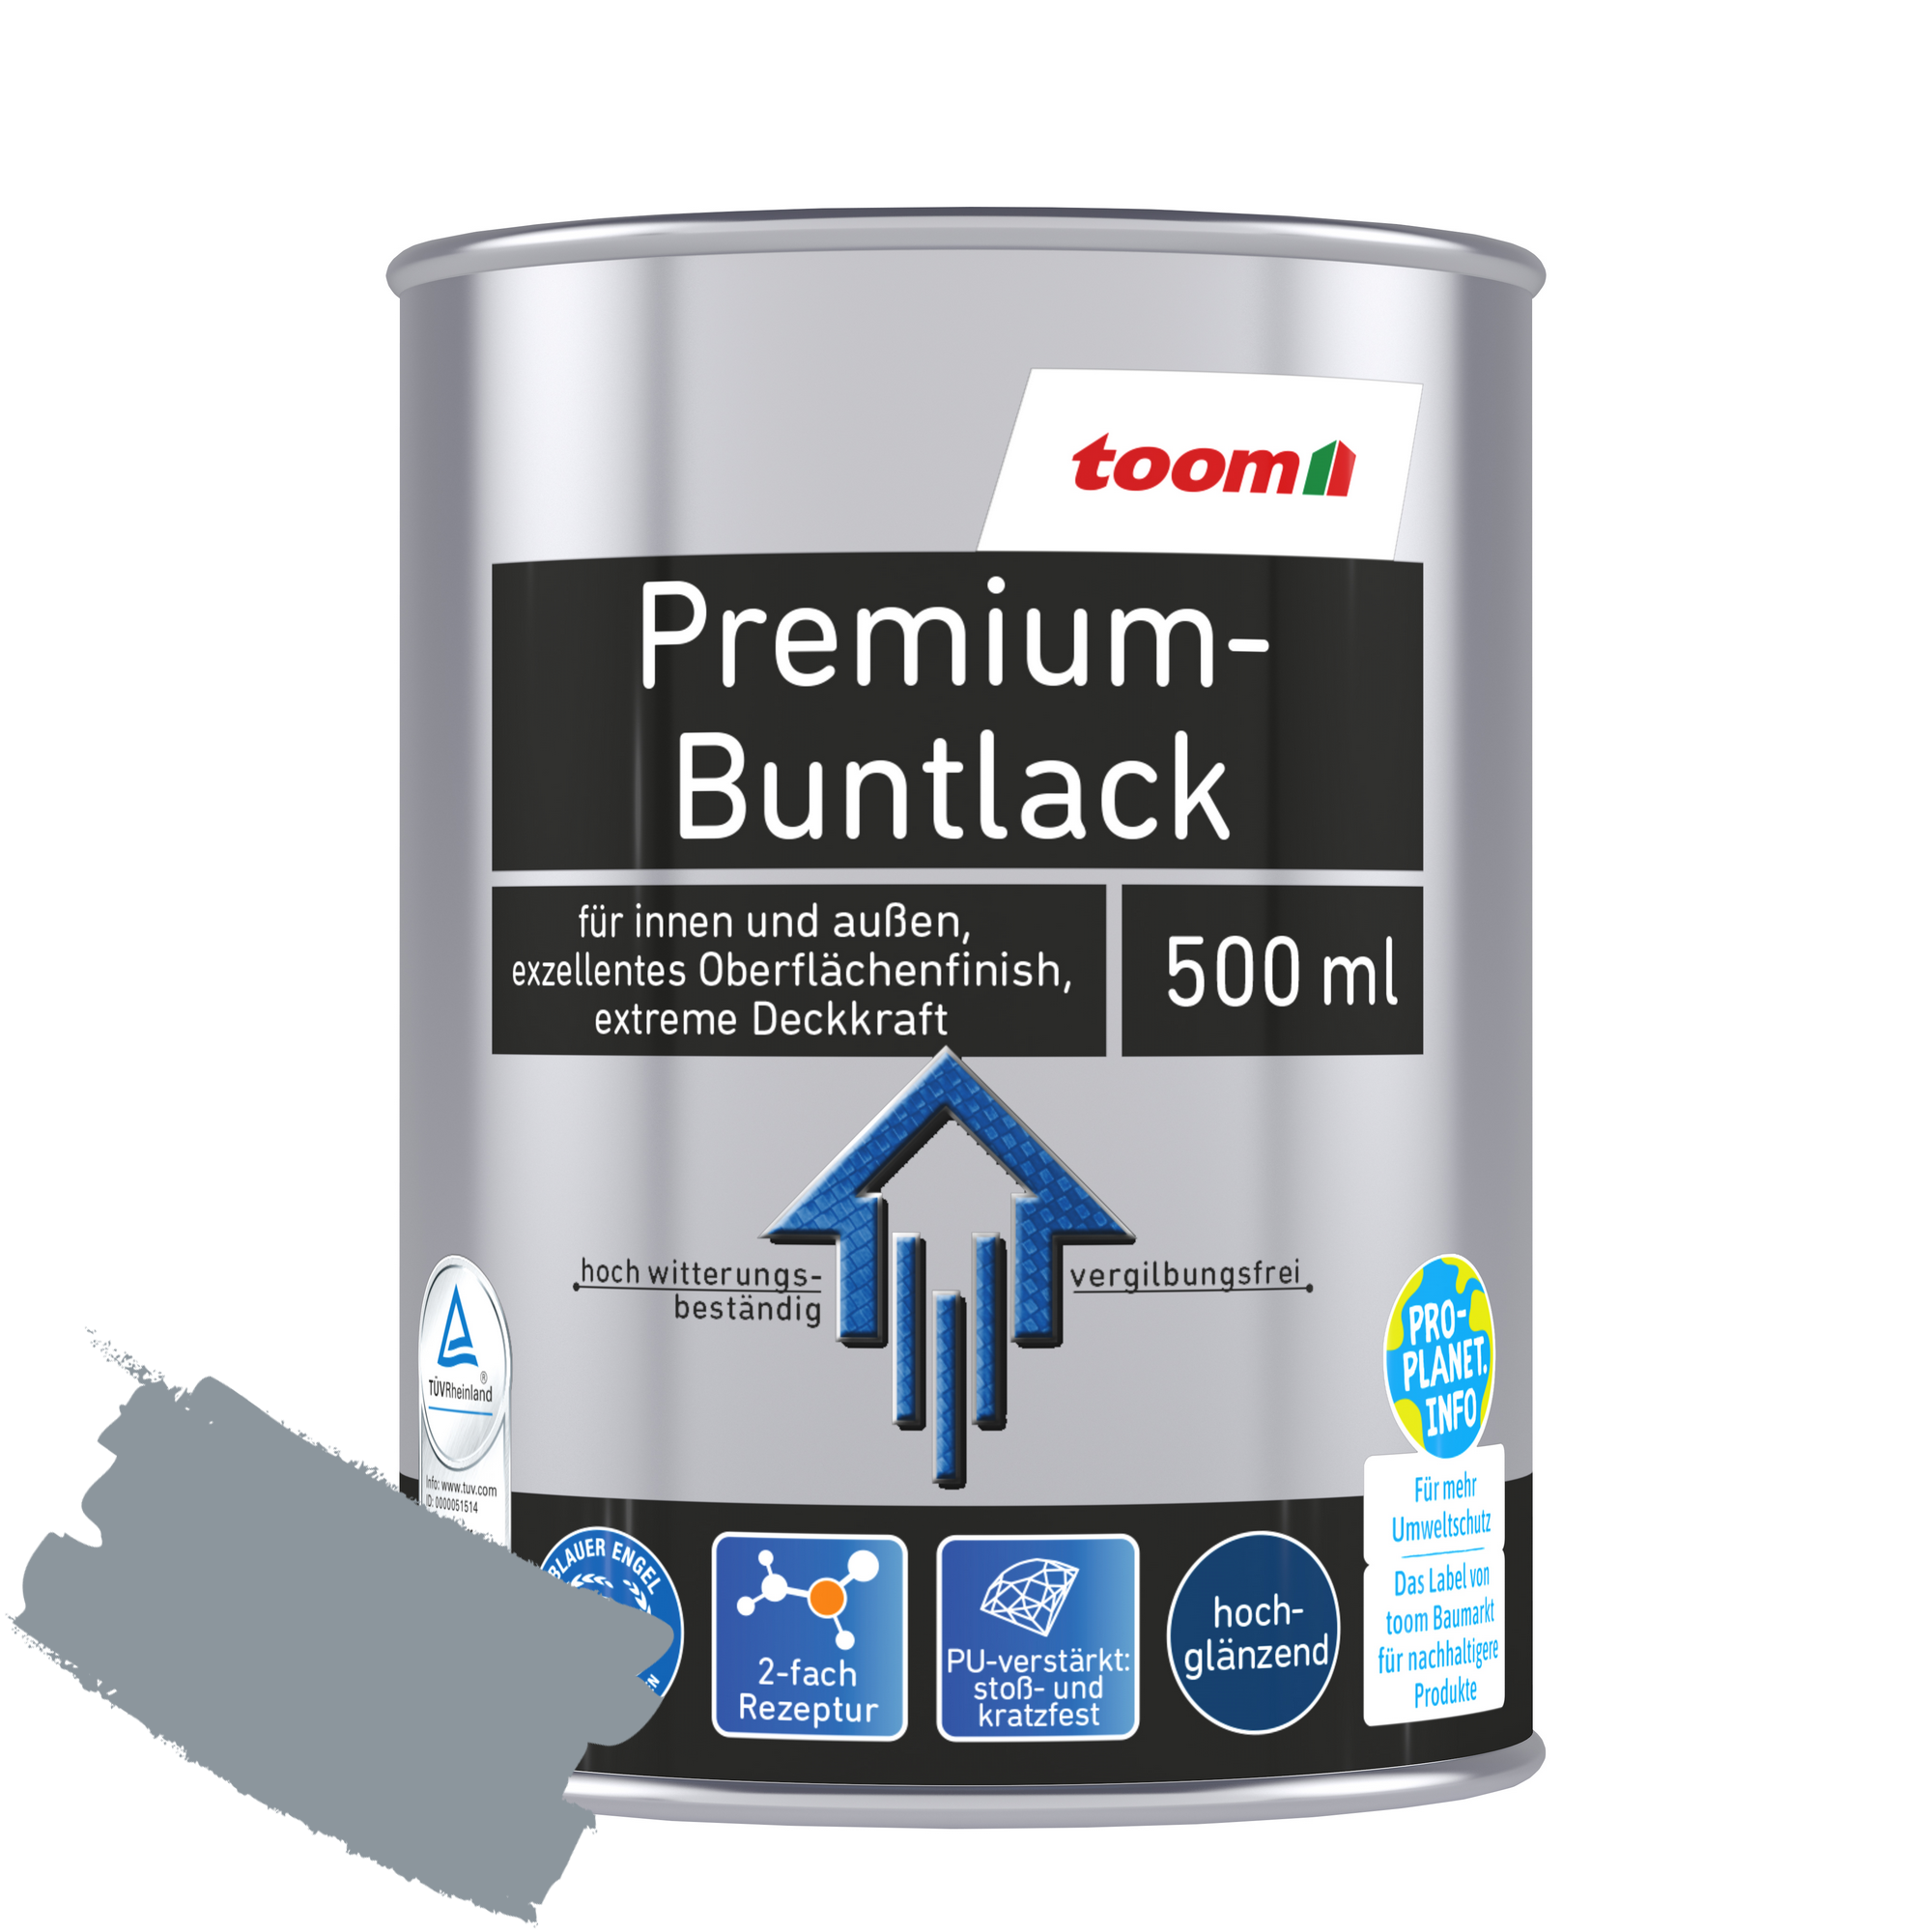 Premium-Buntlack silbergrau glänzend 500 ml + product picture